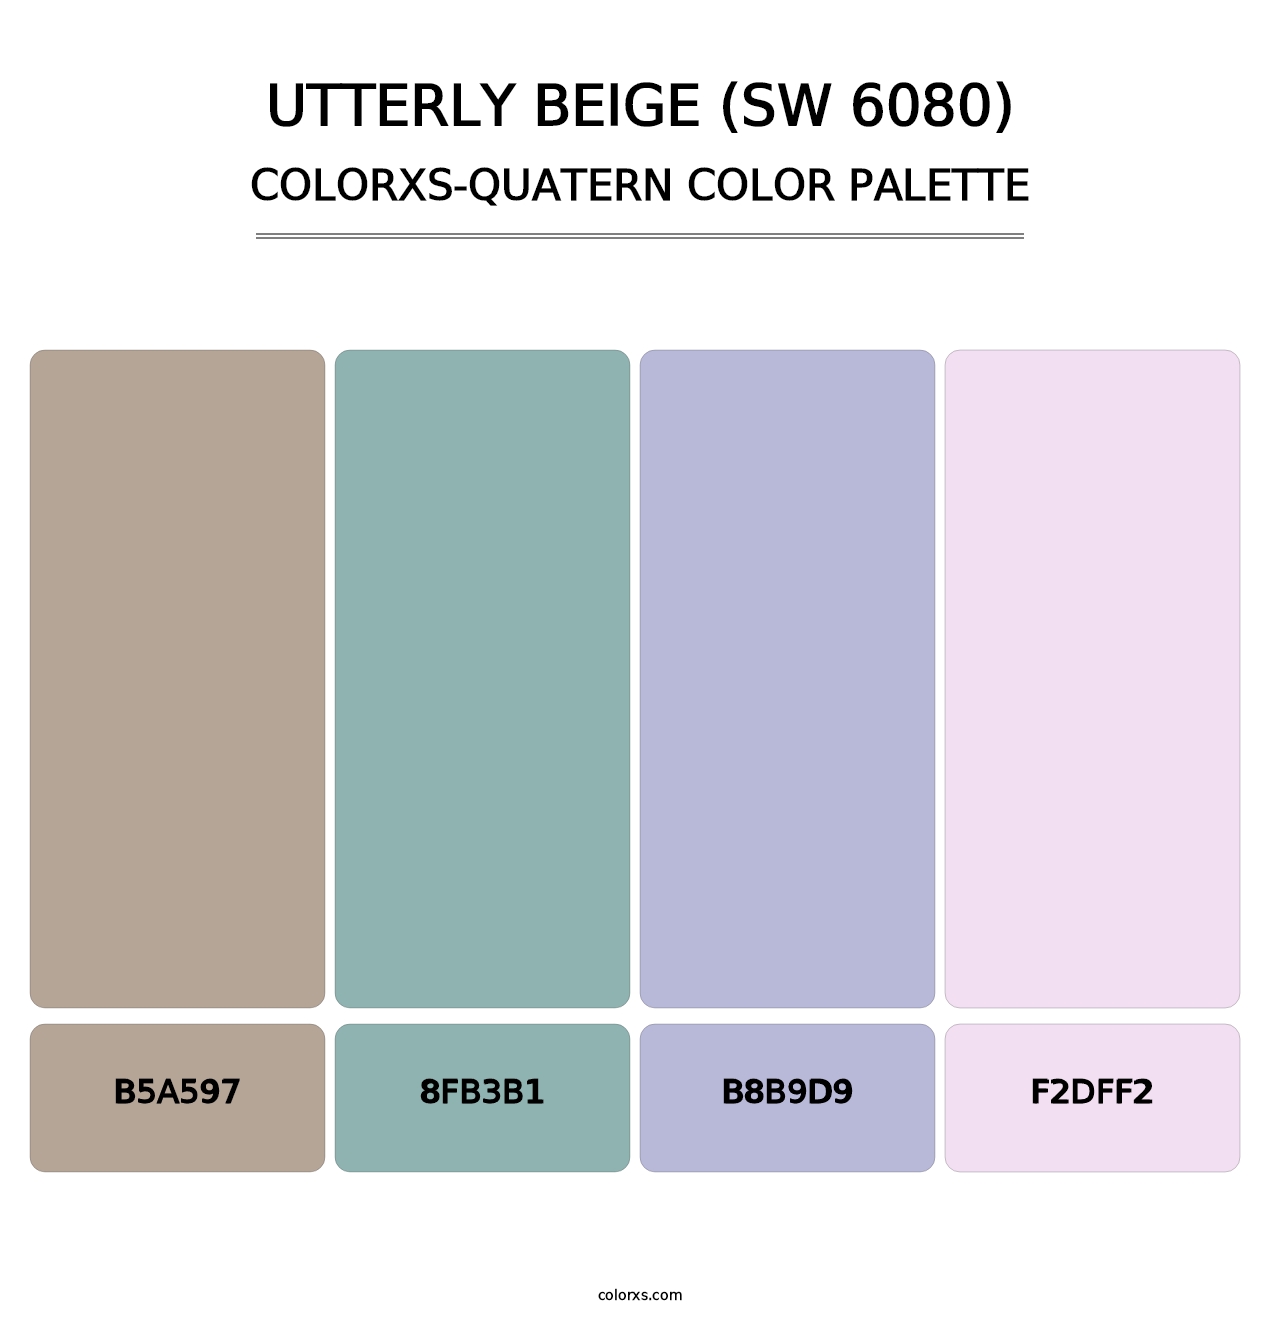 Utterly Beige (SW 6080) - Colorxs Quatern Palette